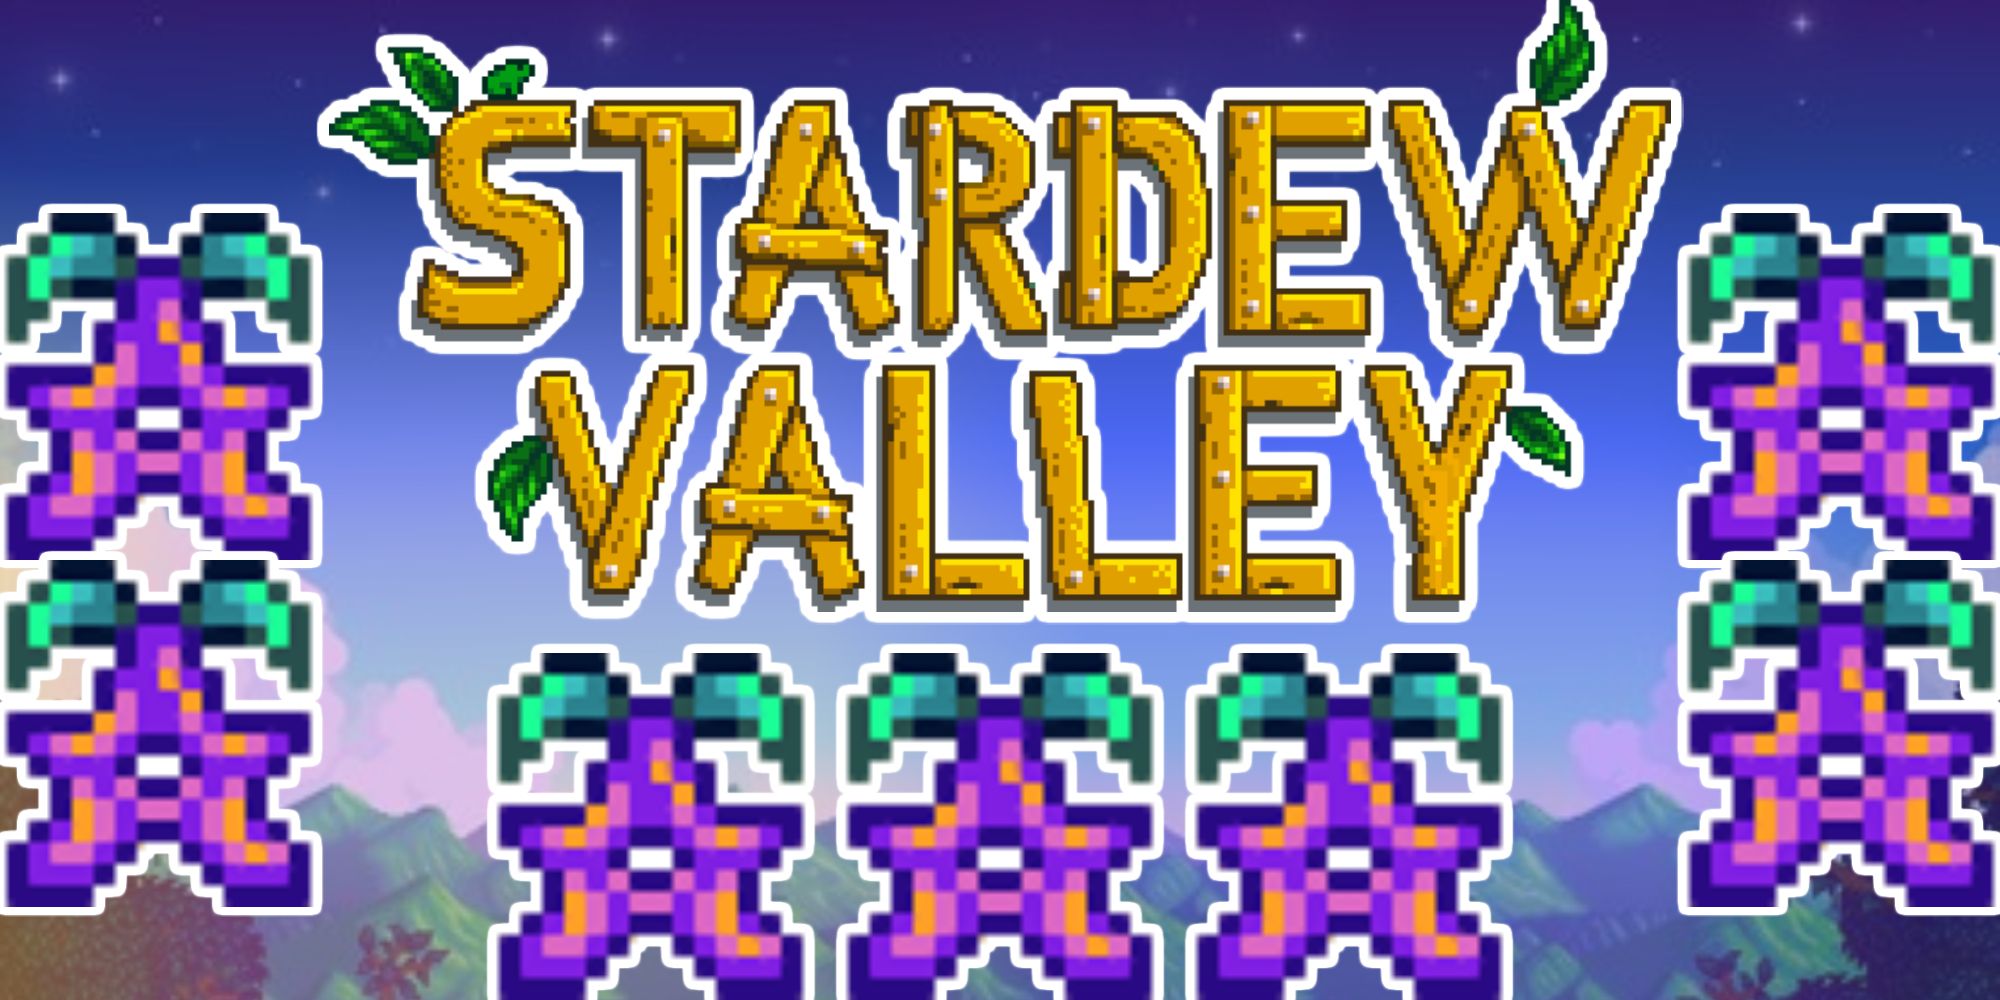 https://static0.gamerantimages.com/wordpress/wp-content/uploads/2022/08/Stardew-Valley-Stardrops-Lead-Image.jpg